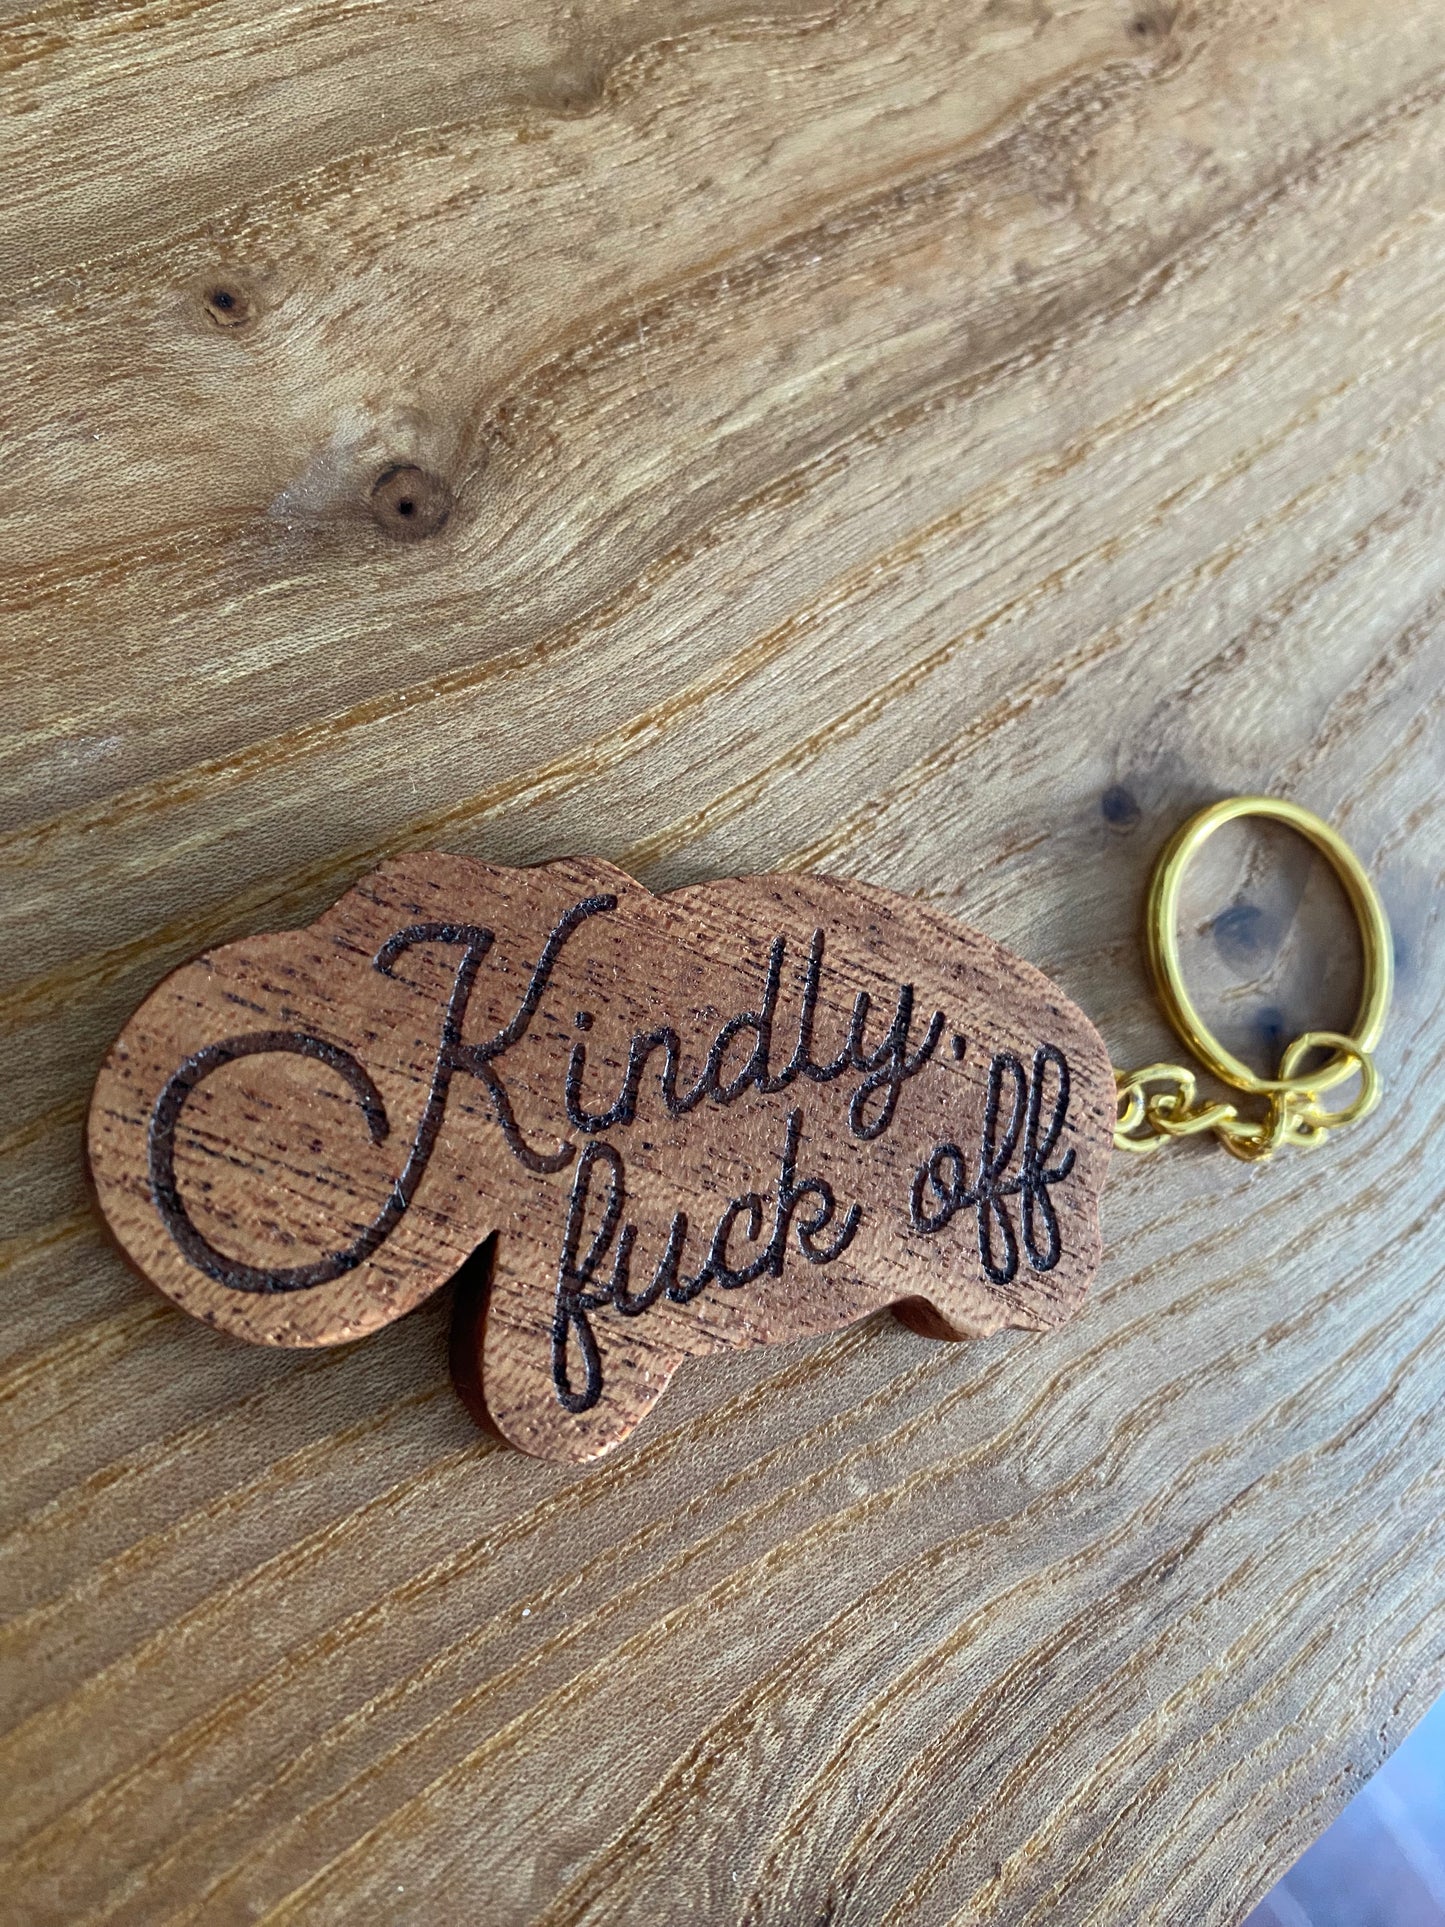 Kindly fuck off house hippo keychains -hardwood